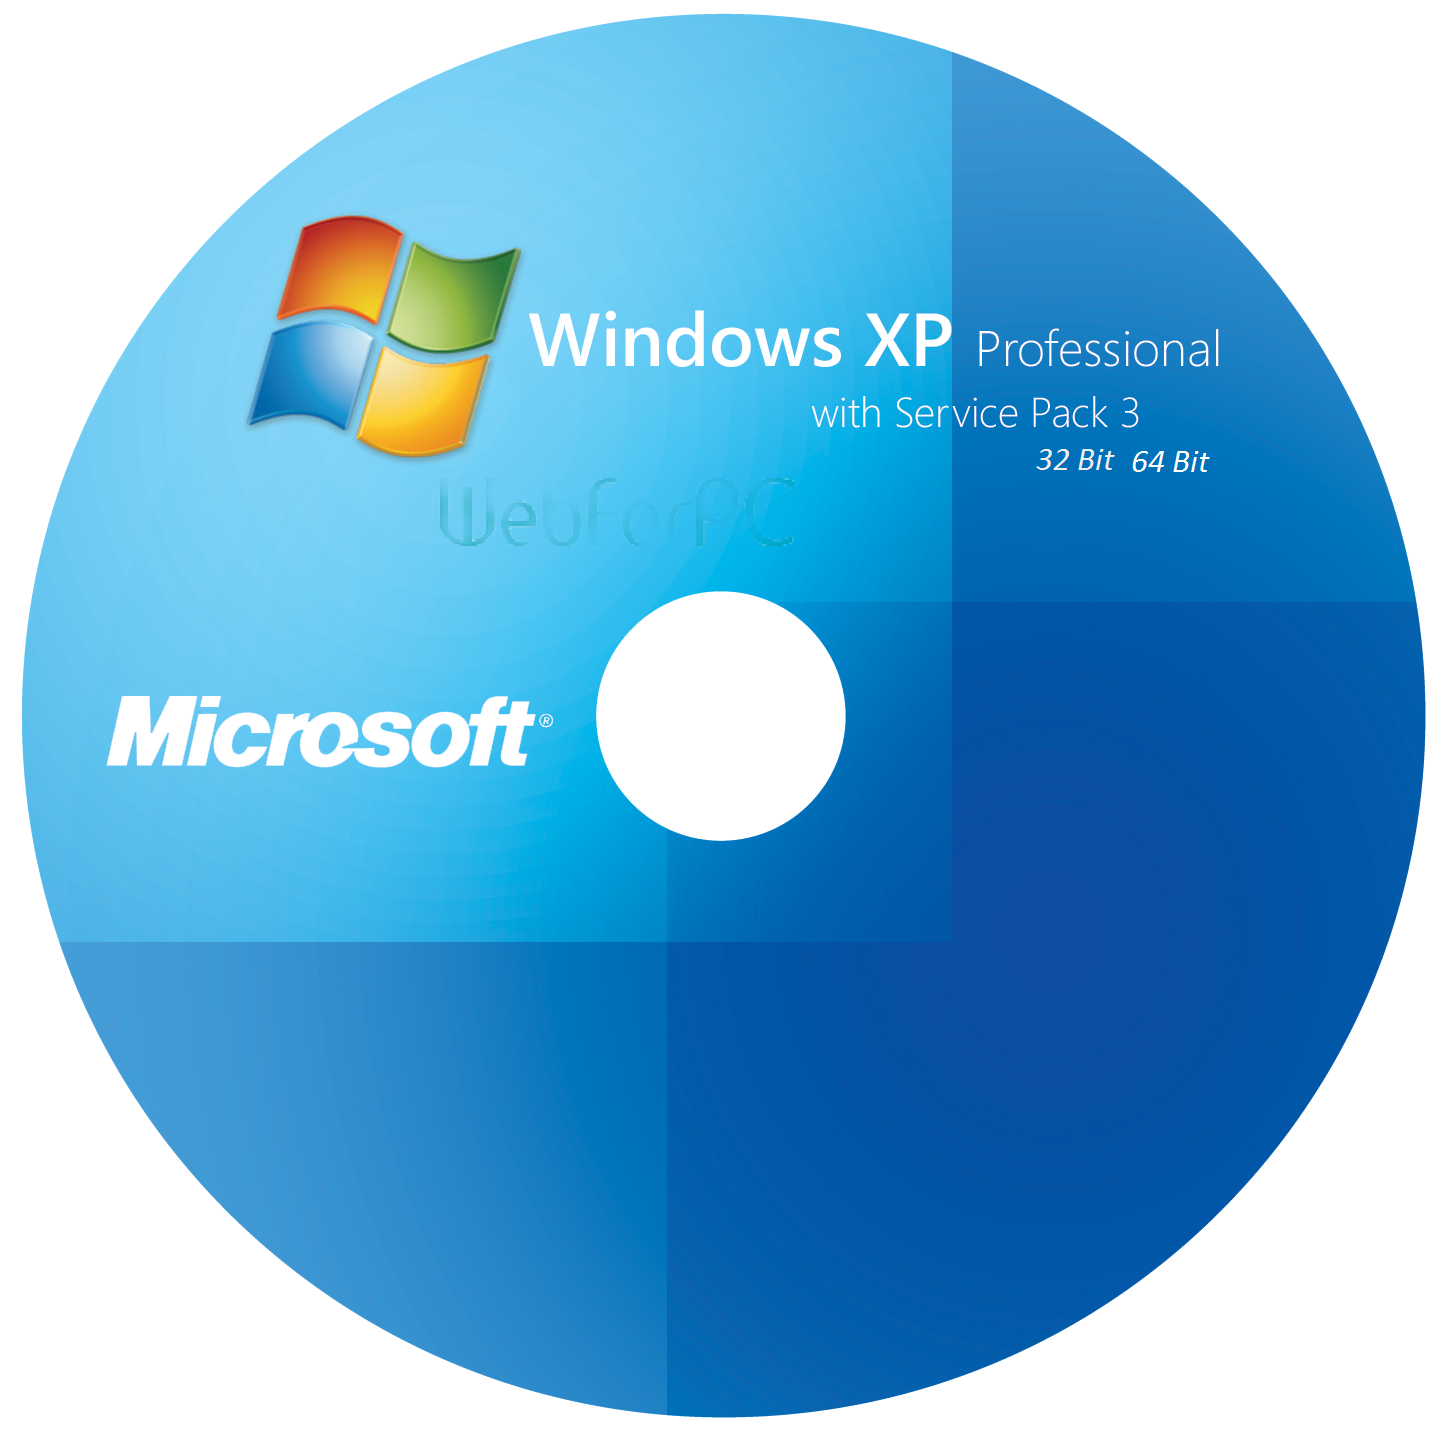 ghost windows xp sp3 download